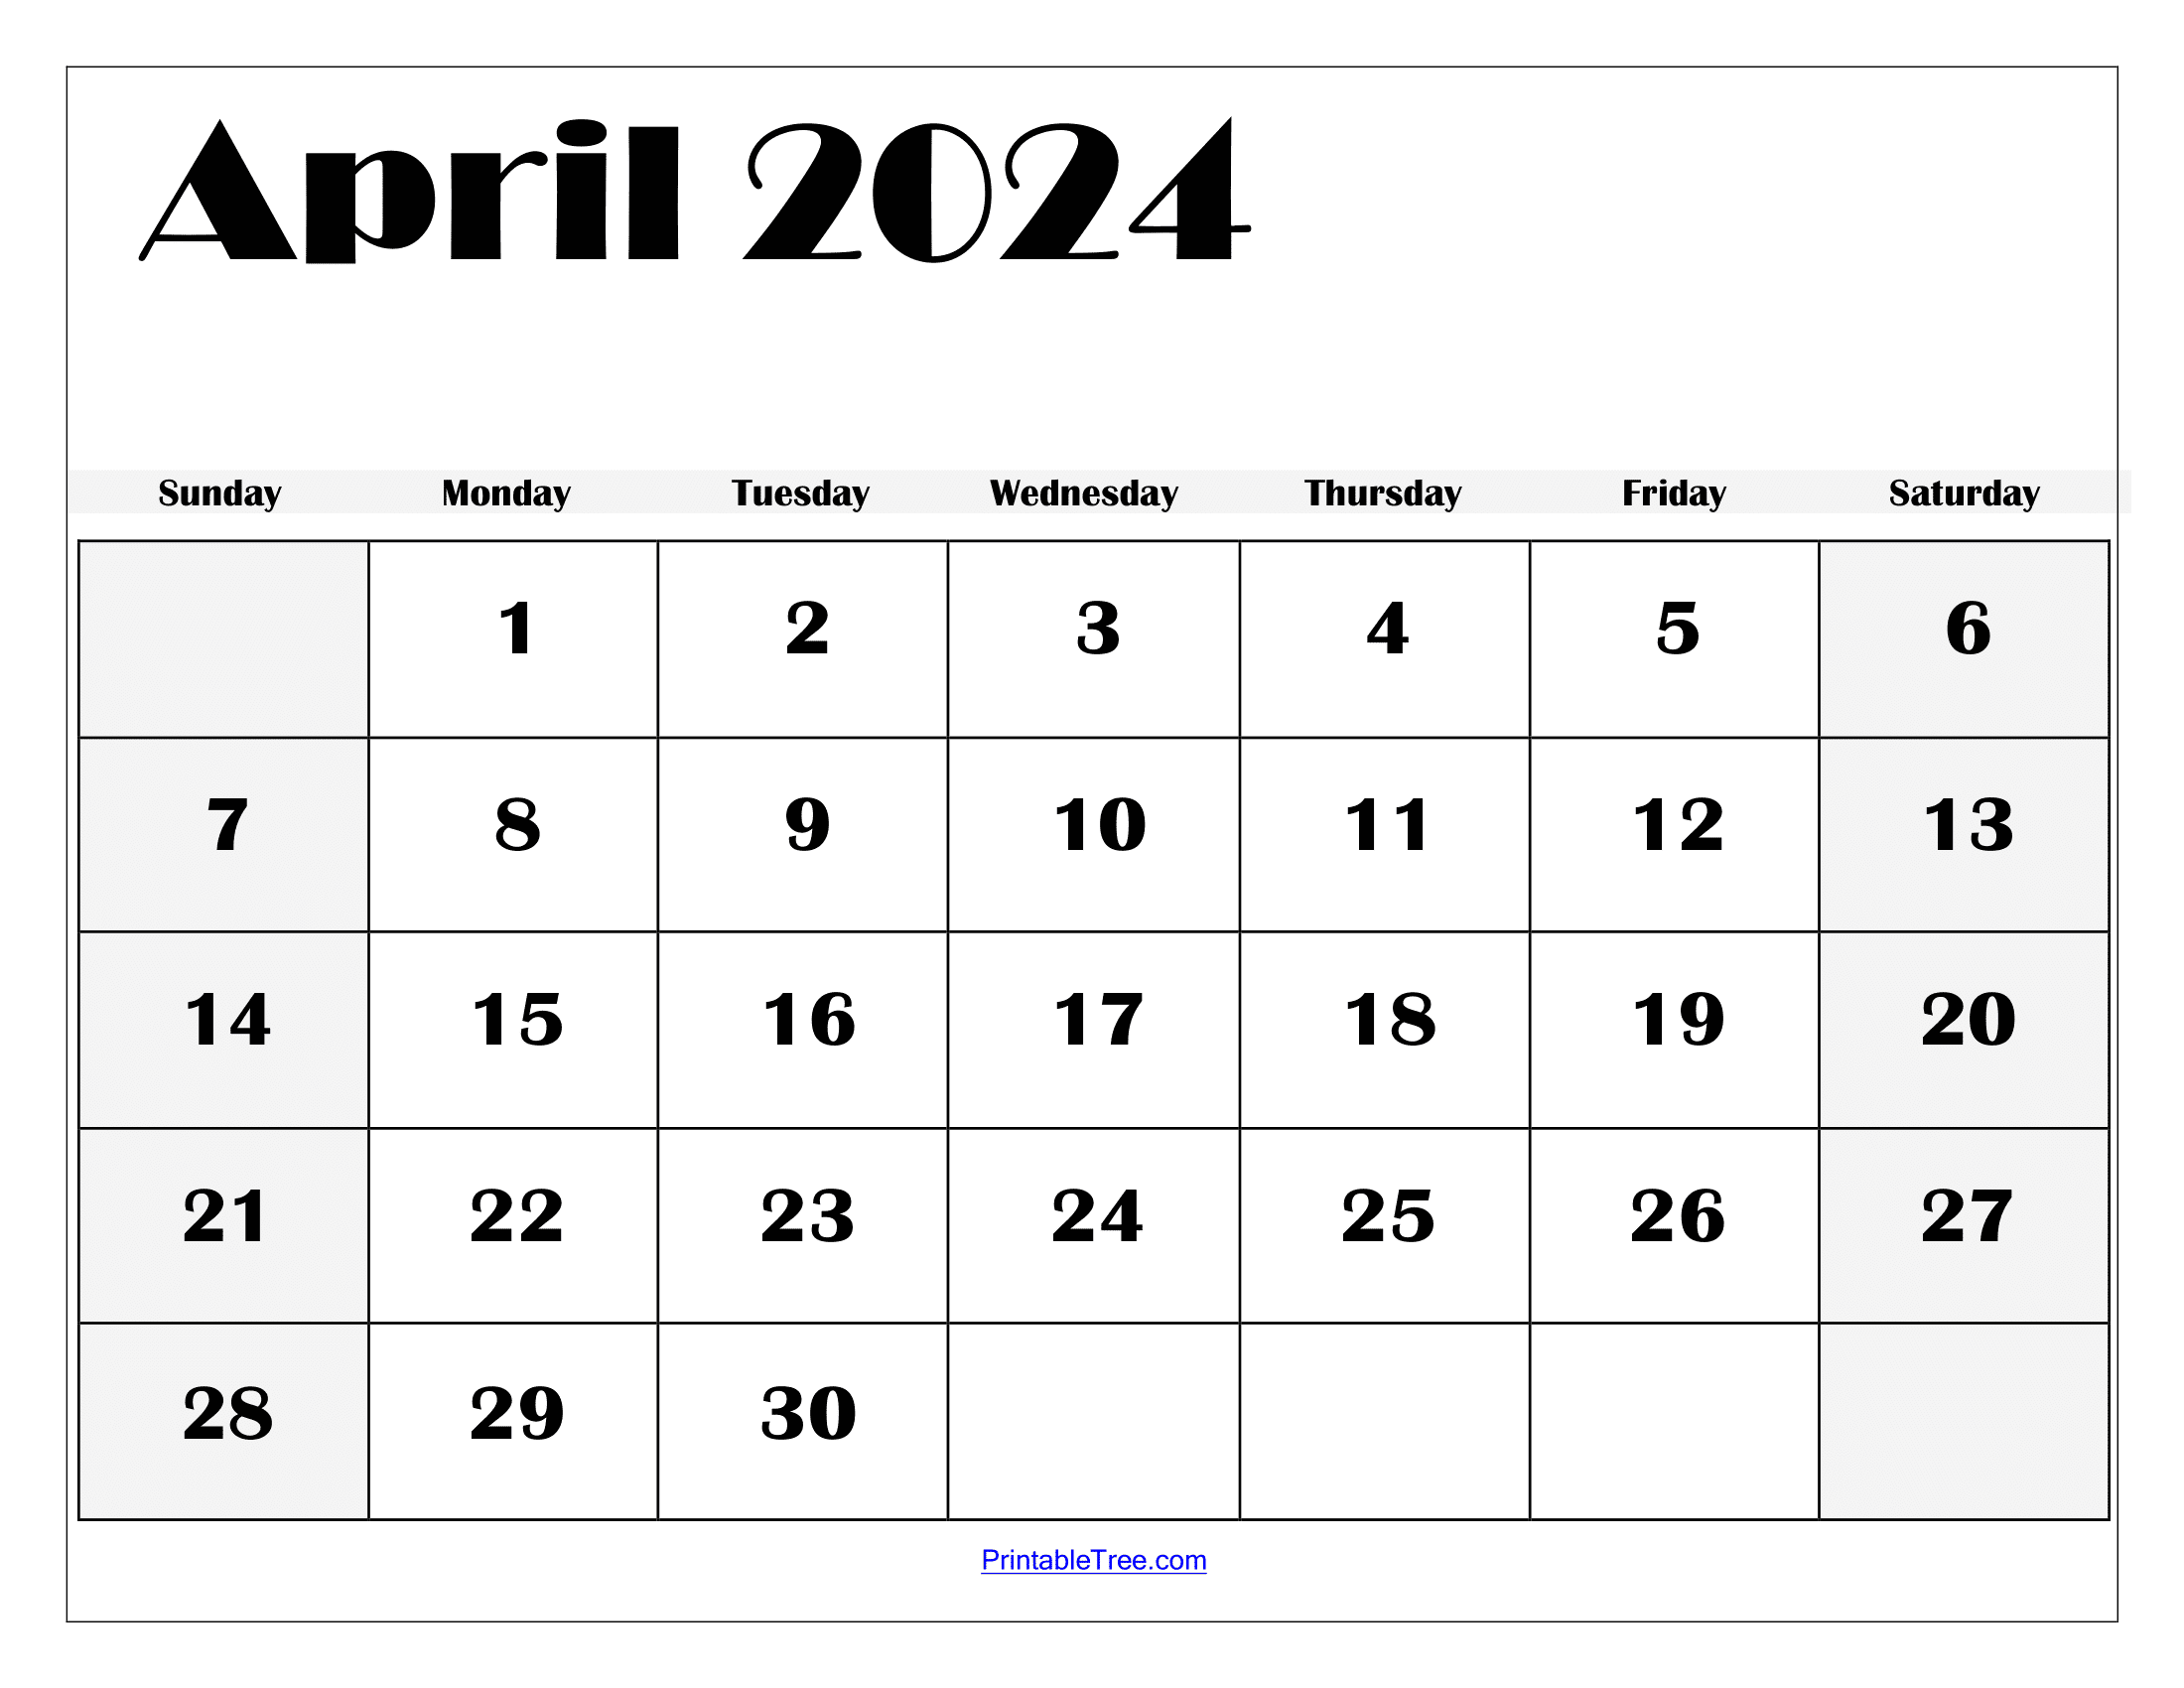 Blank April 2024 Calendar Printable Pdf Template With Holidays for Calendar Template April 2024 Printable